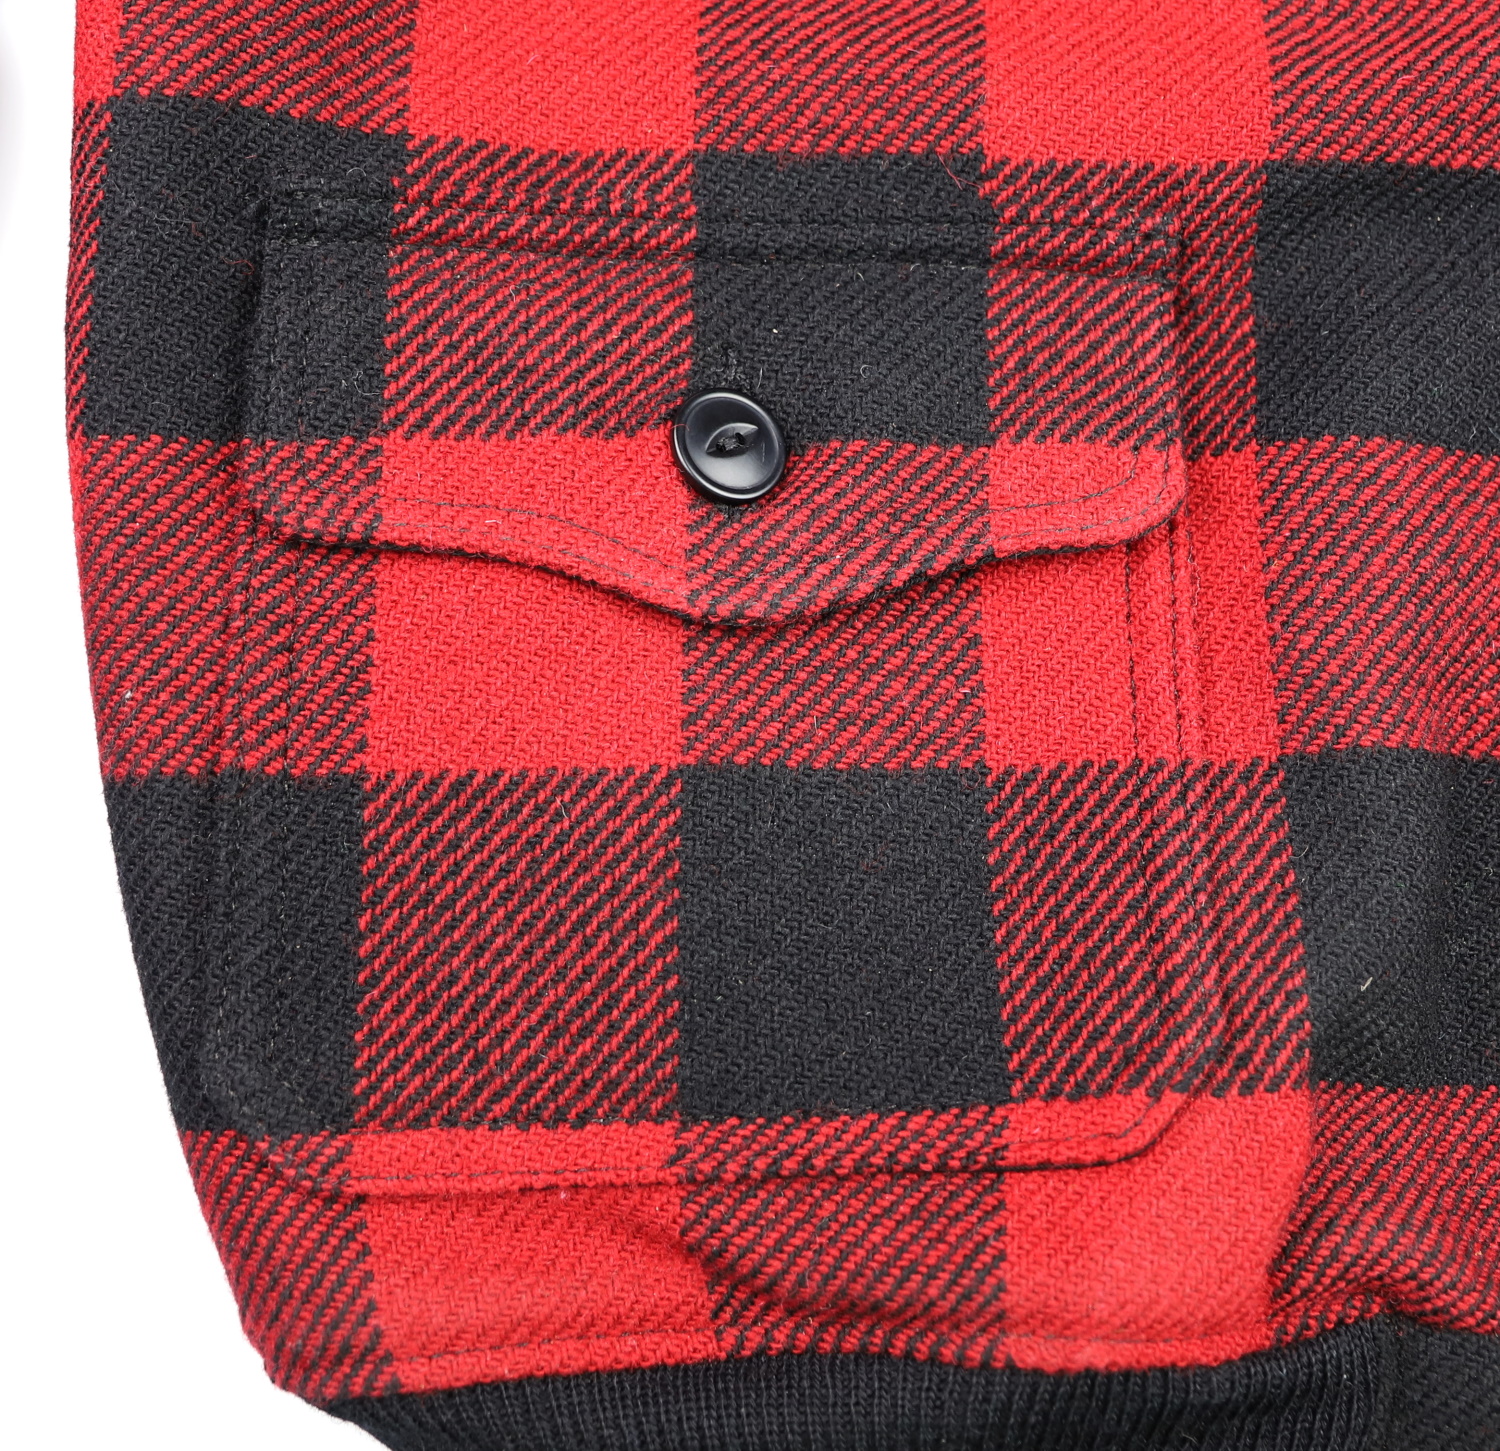 Aero Waterfront Red and Black Wool Fur collar LW8 patch pocket.jpg